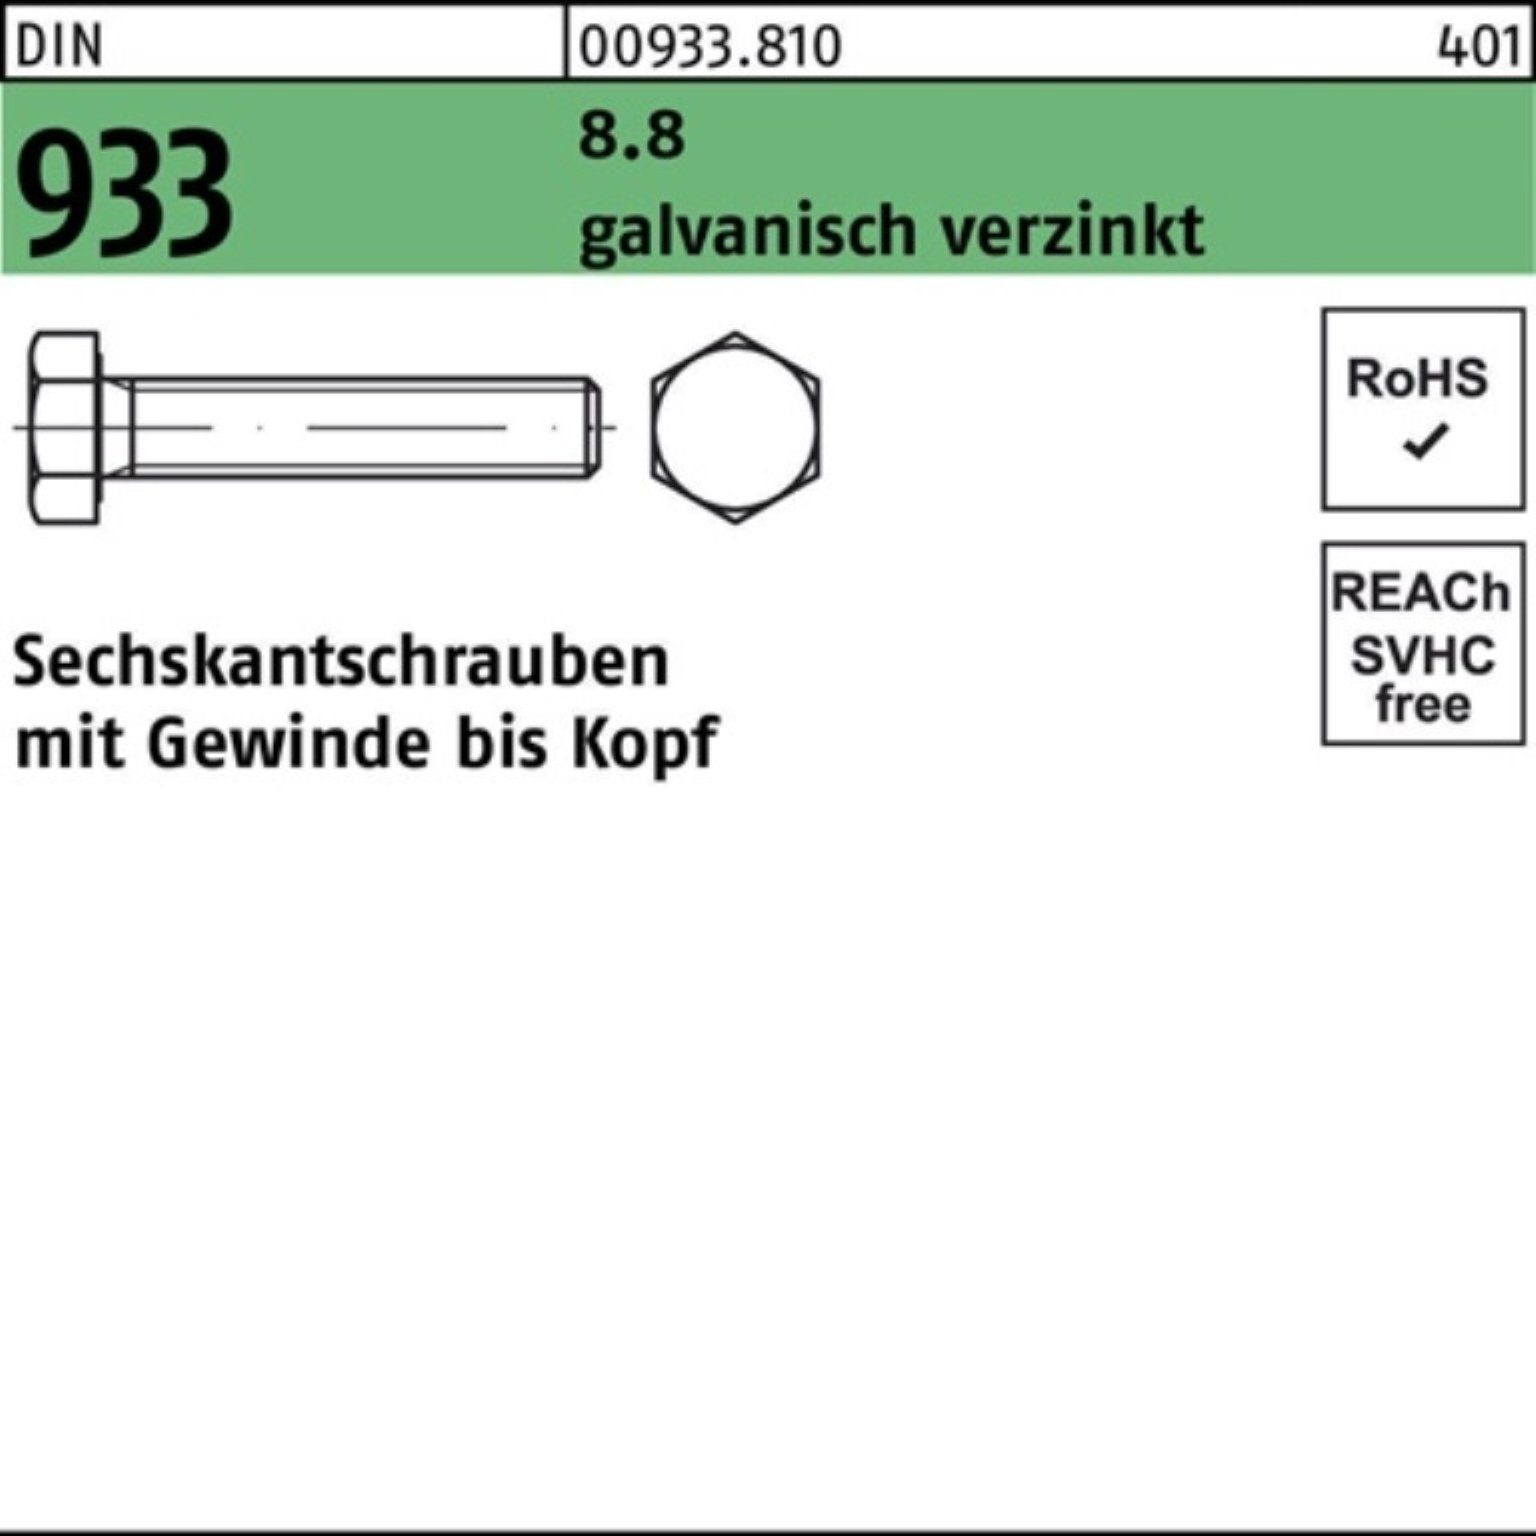 Reyher Sechskantschraube 100er 933 Pack 8.8 DIN Stü 25 Sechskantschraube M22x 90 VG galv.verz